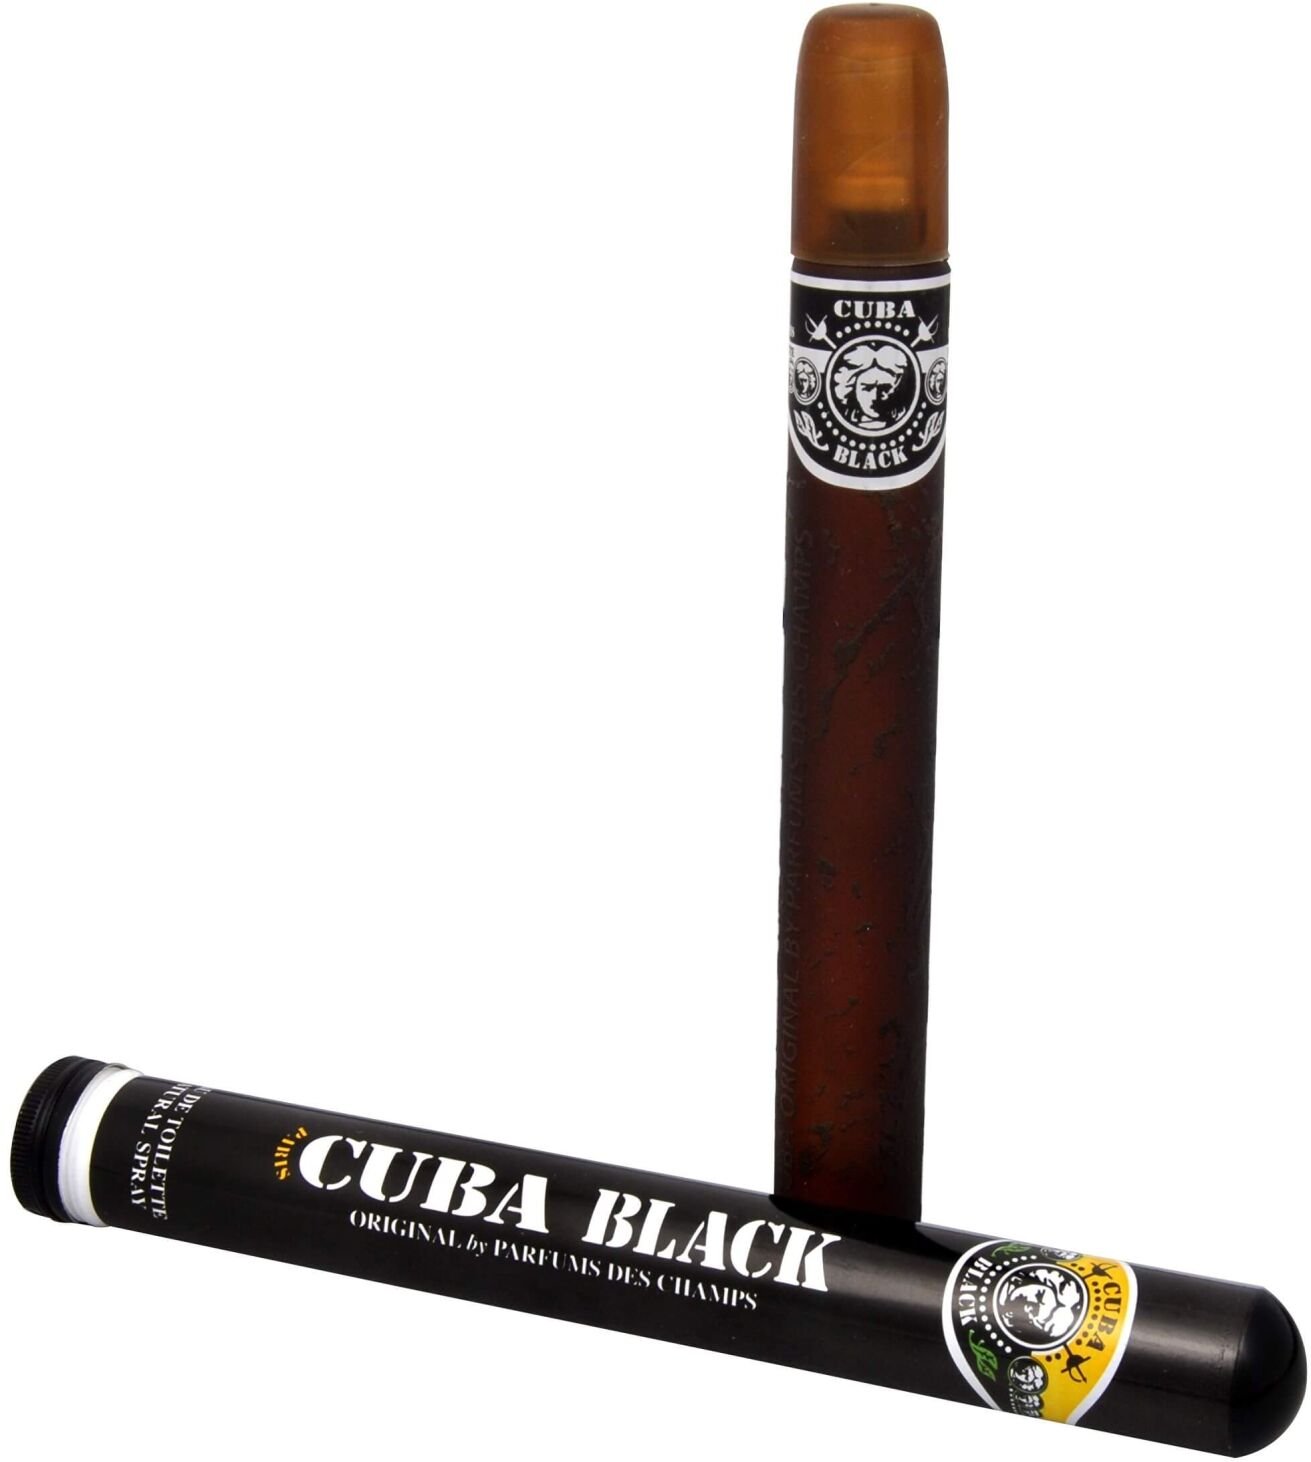 Cuba Black - EDT 100 ml